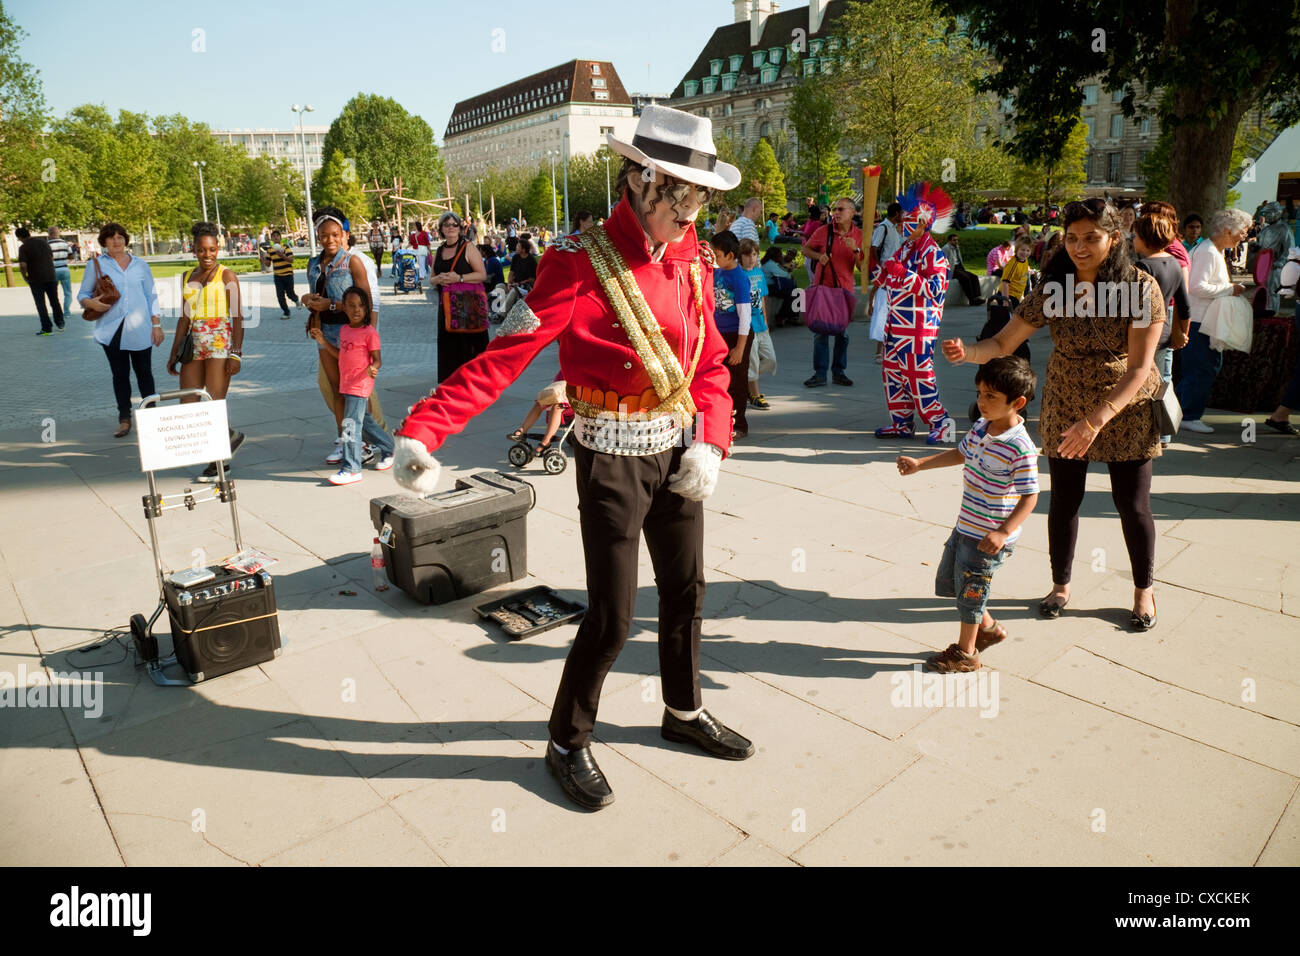 A Michael Jackson lookalike street performer dancing, South Bank, London UK Stock Photo